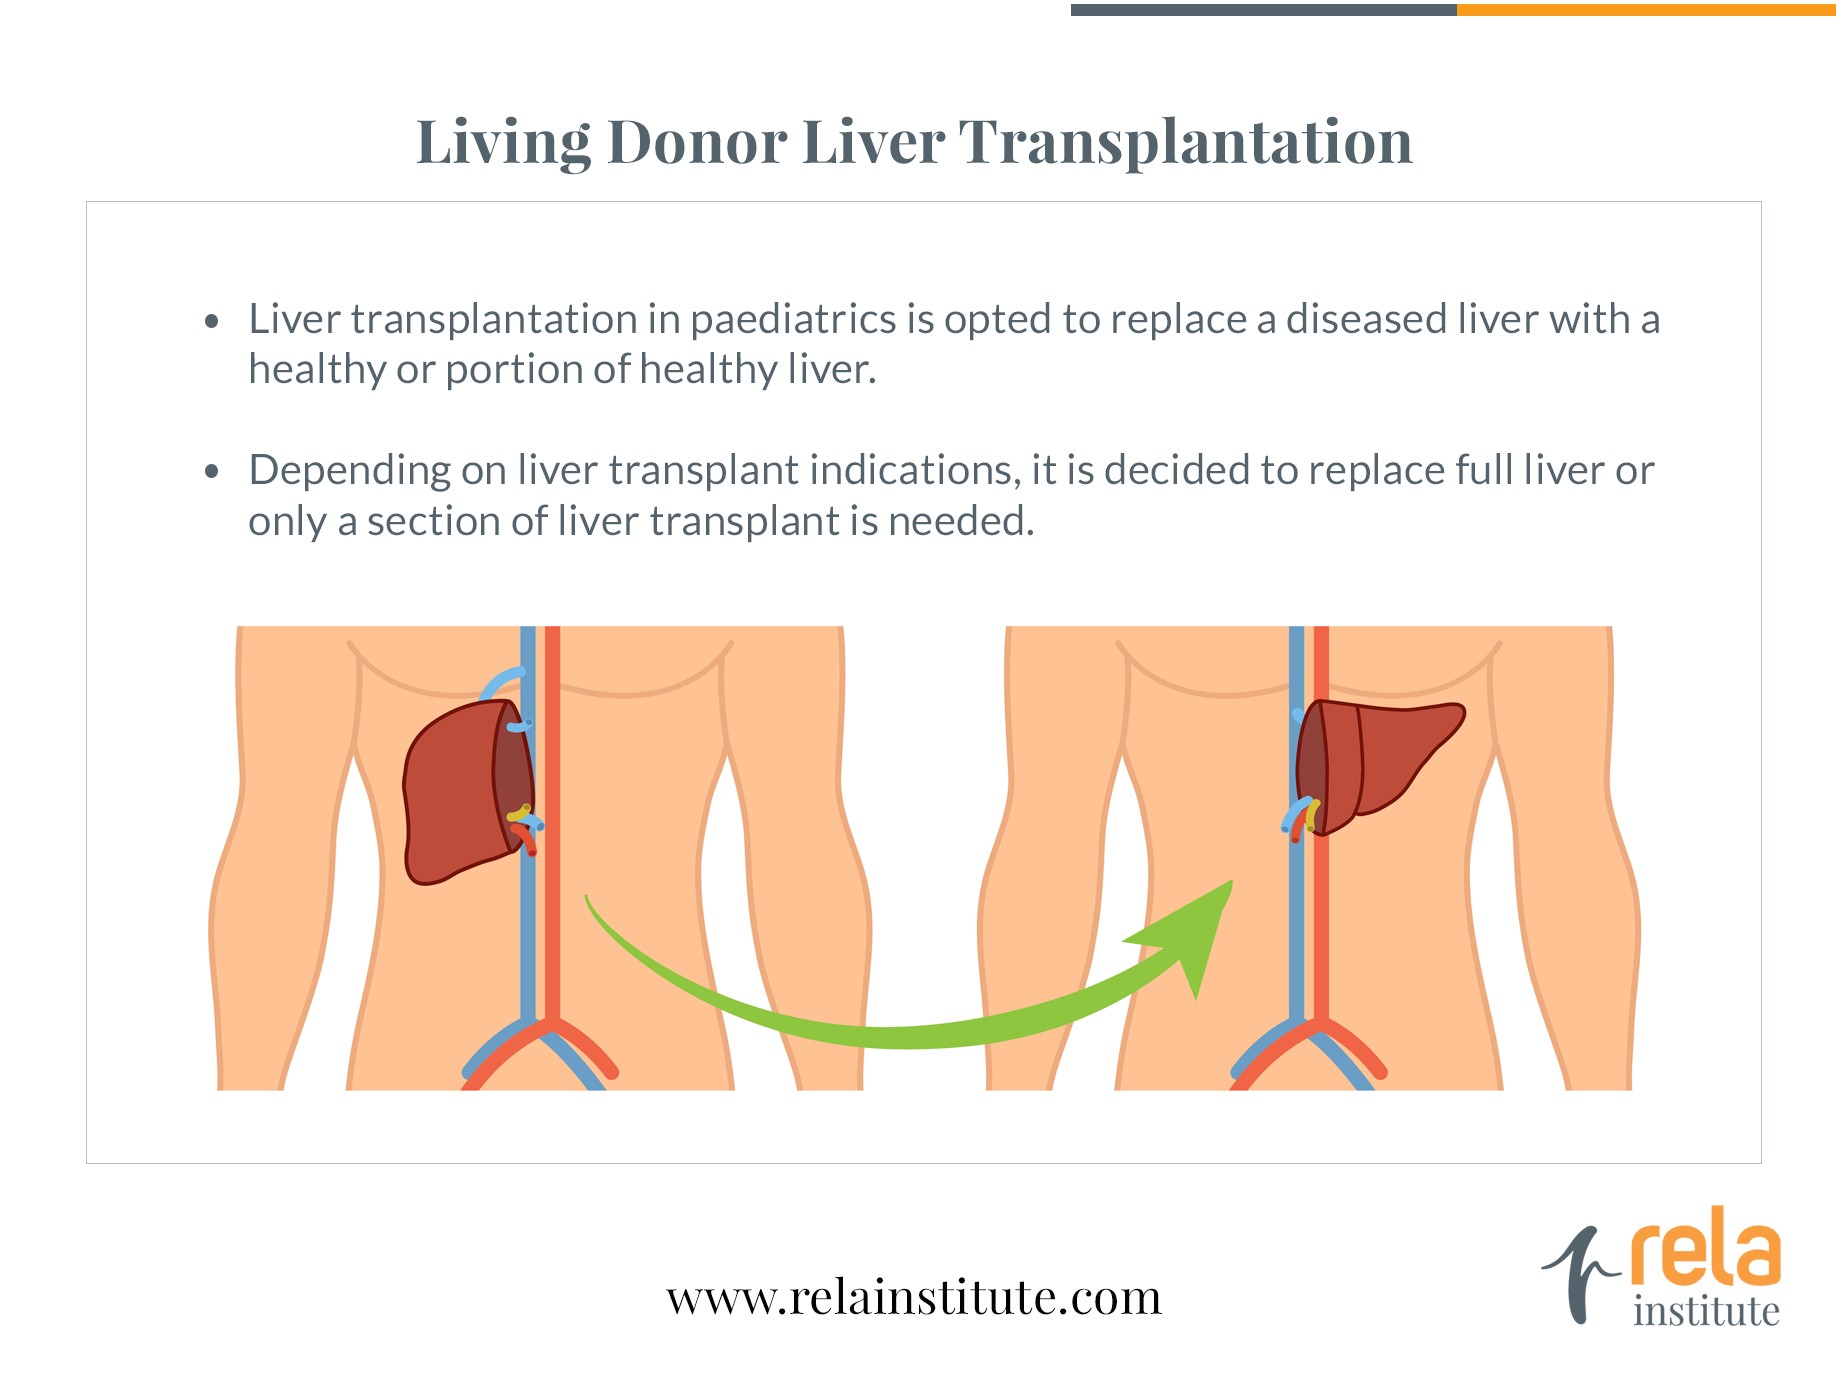 Paediatric Liver Transplantation